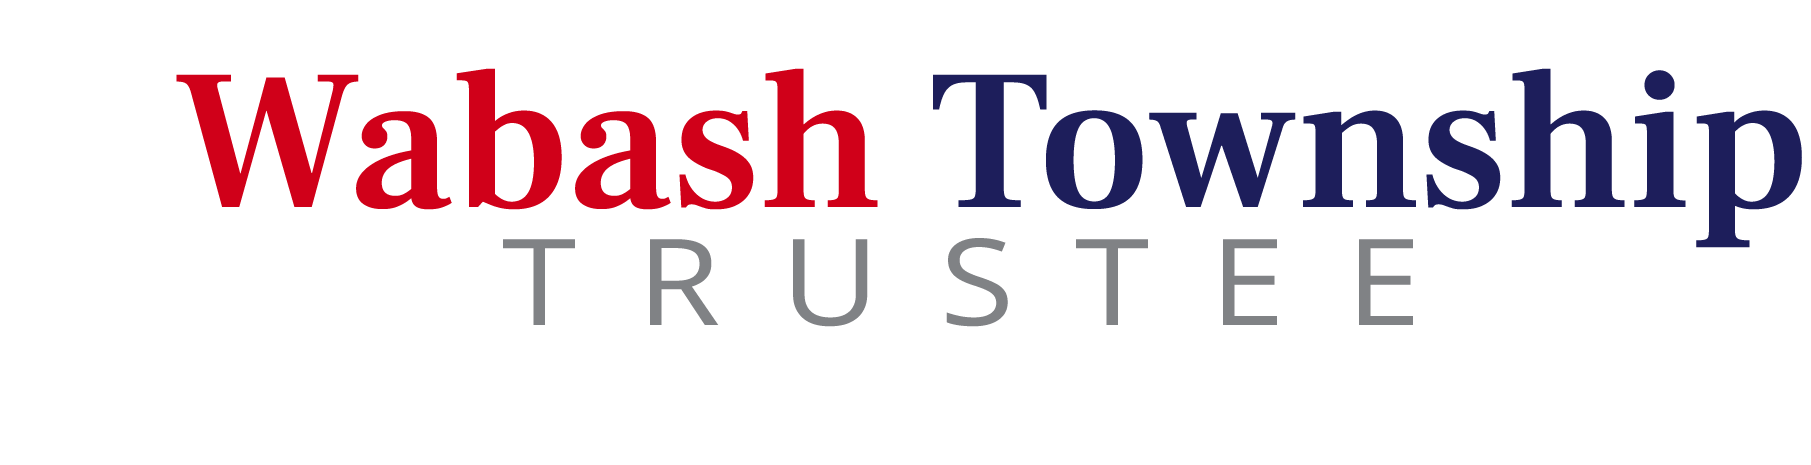 Wabash Township Trustee logo Web